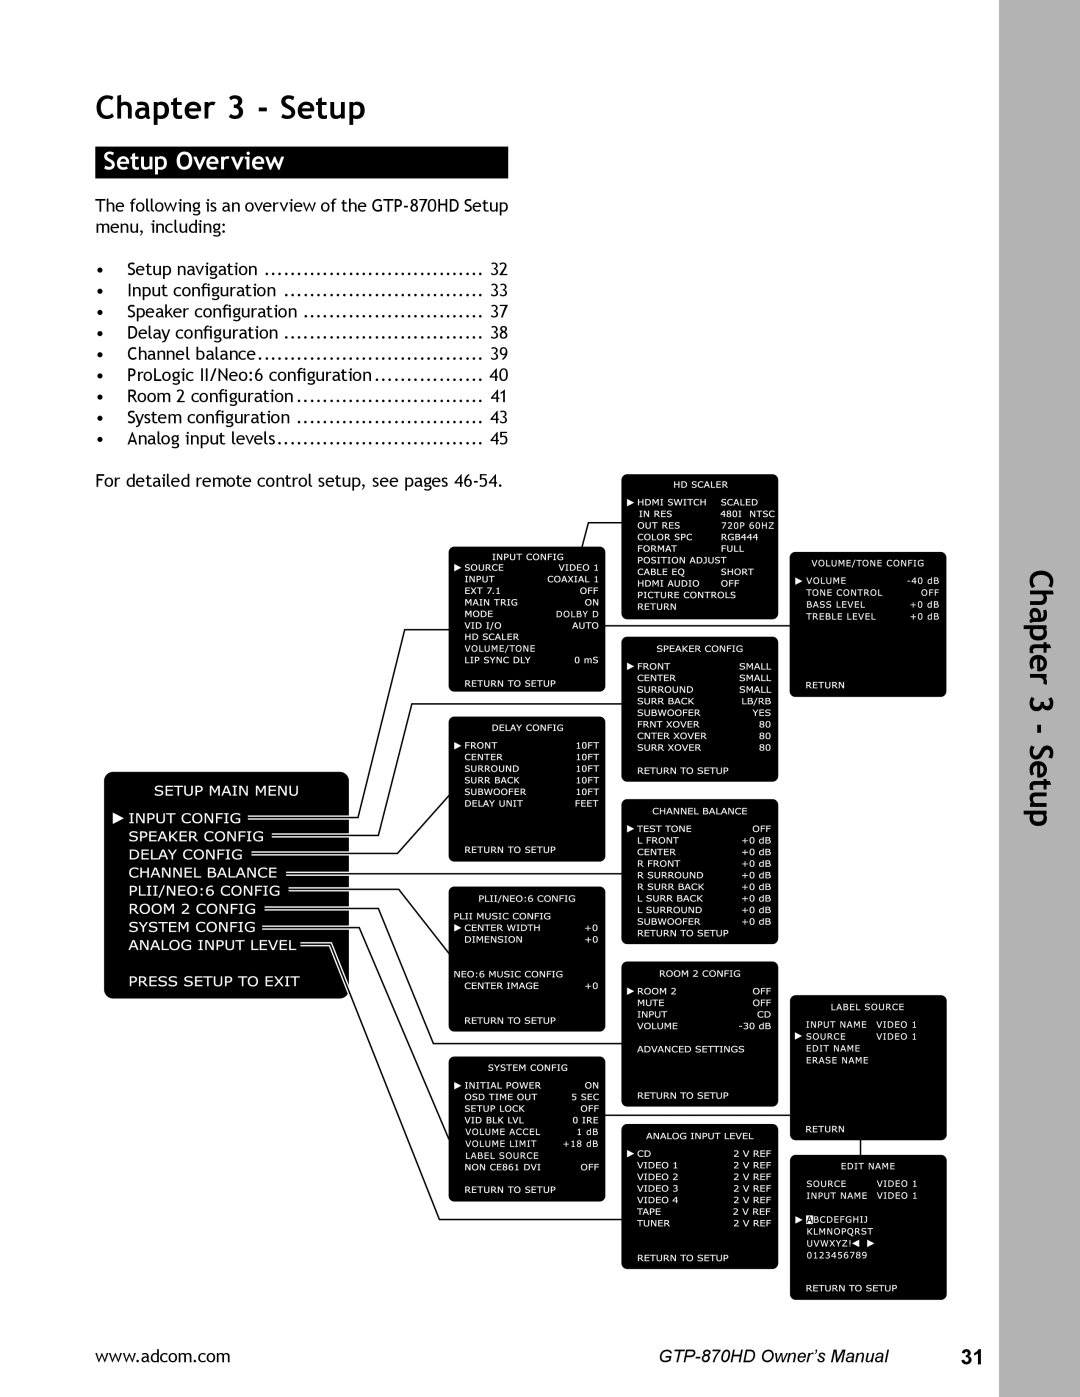 Adcom user manual Setup Overview, GTP-870HDOwner’s Manual 